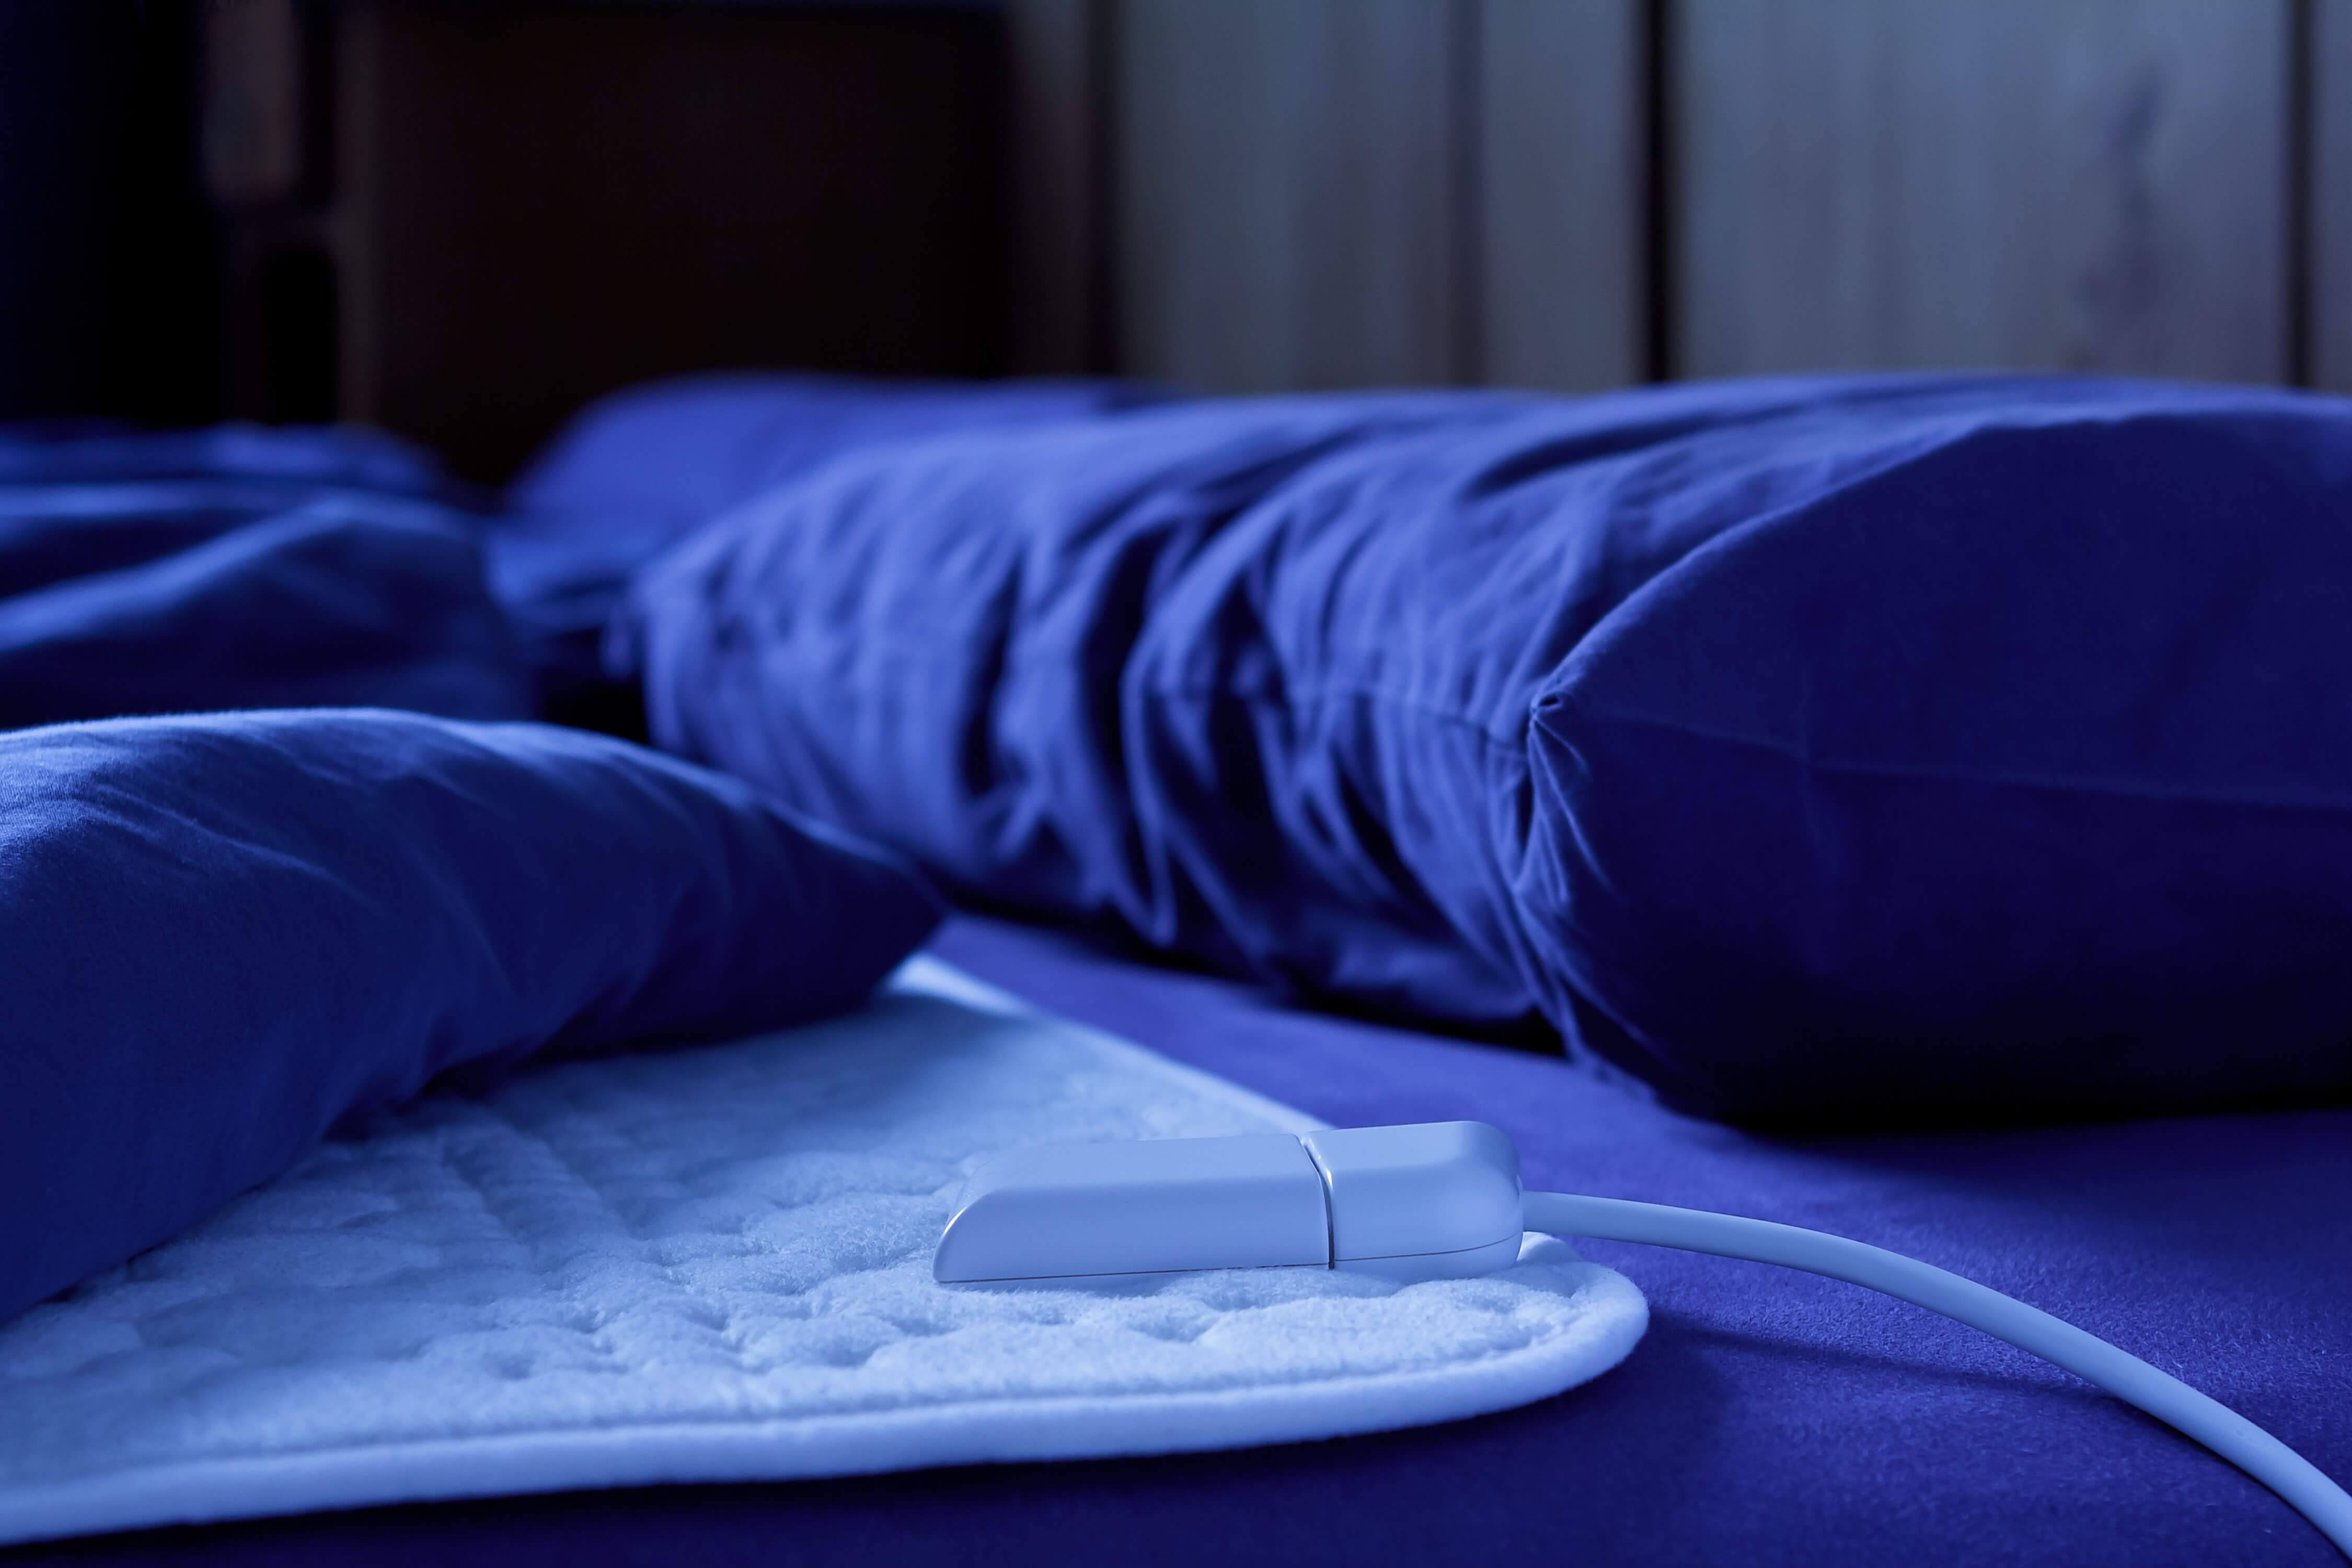 can mattress heating pad be harmful